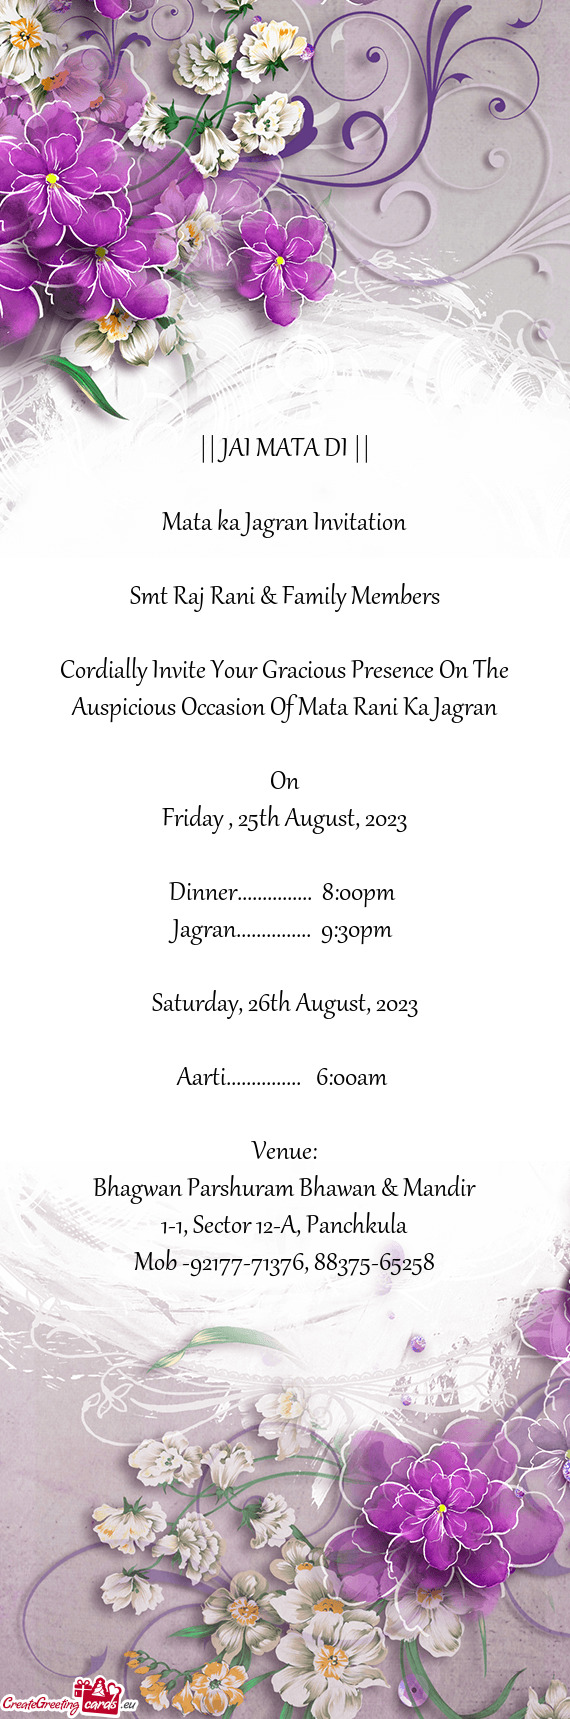 Smt Raj Rani & Family Members